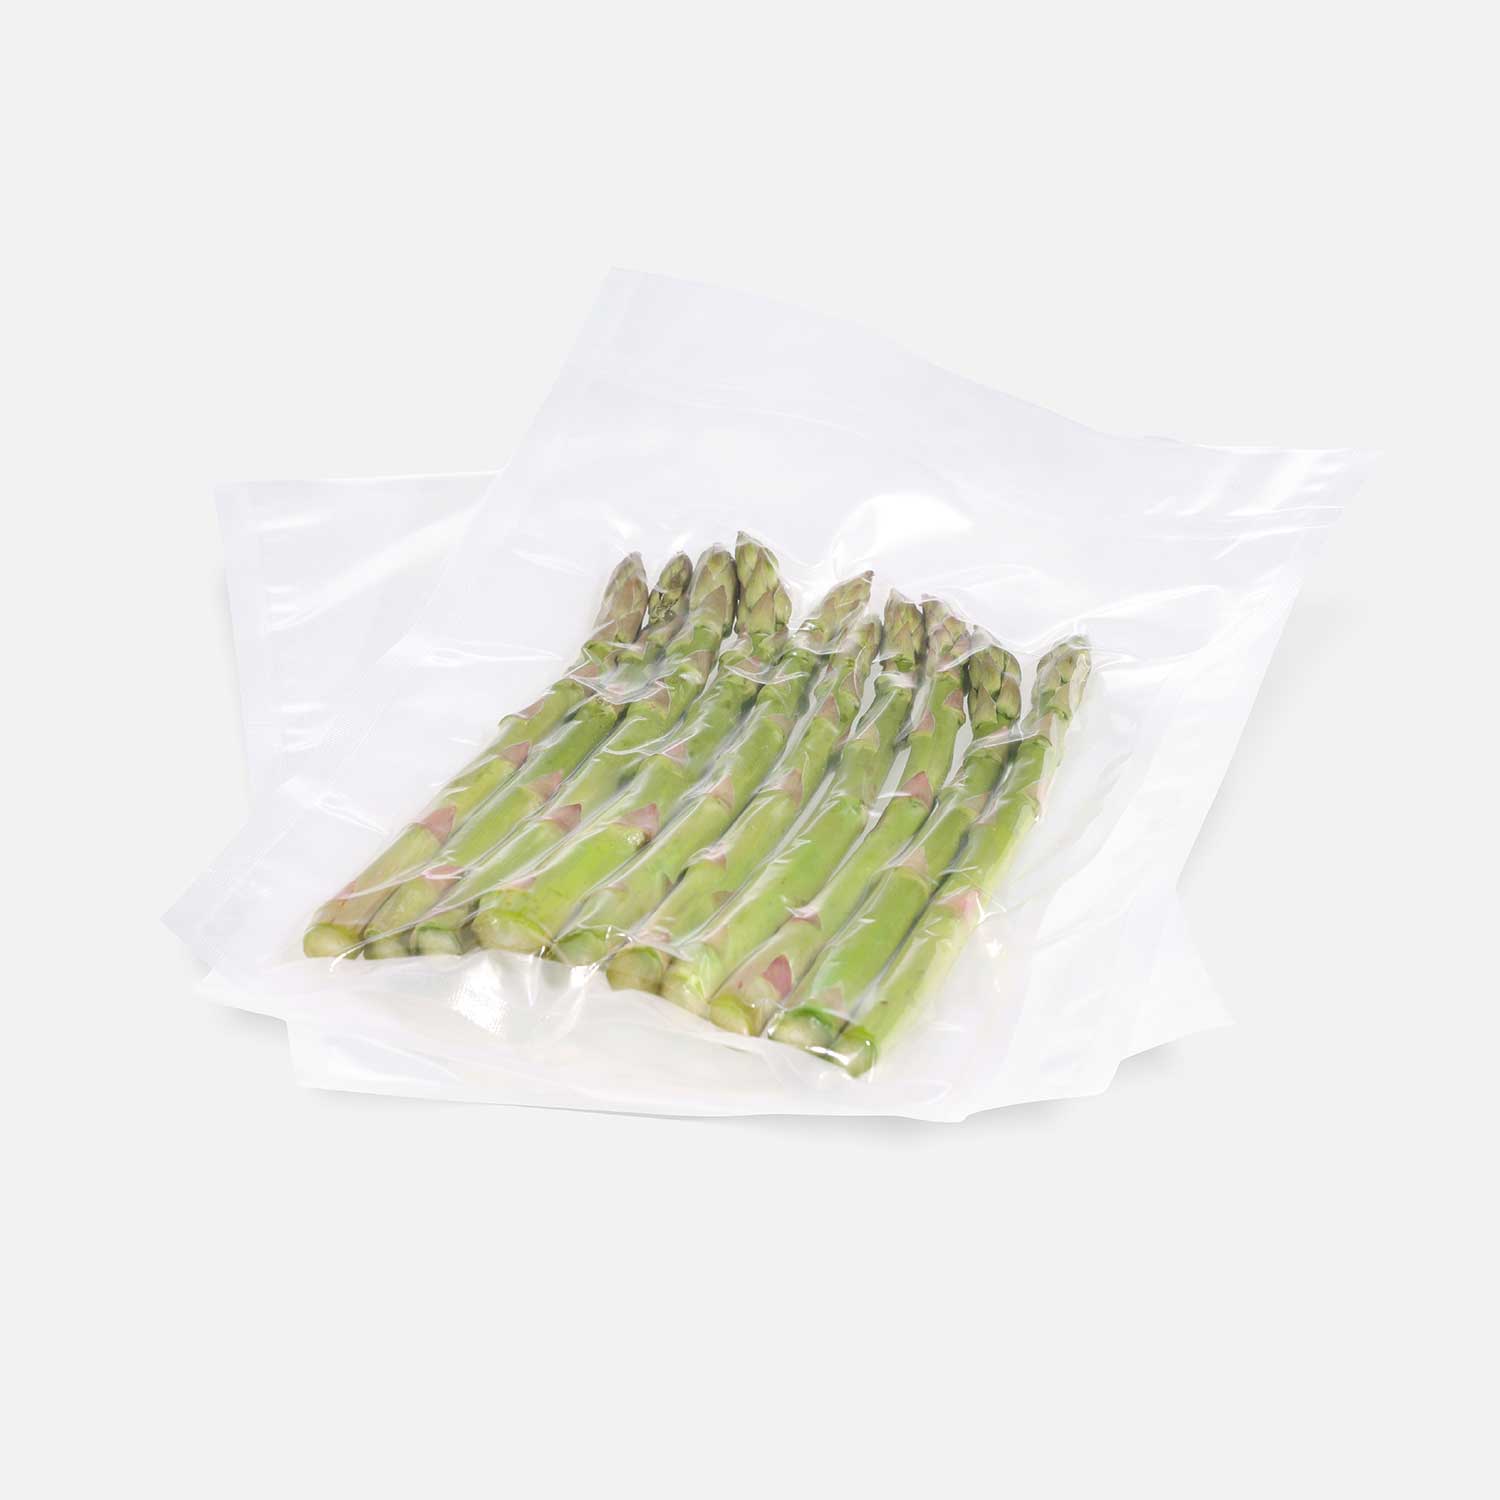 Structured vacuum bags with asparagus vacuum-sealed